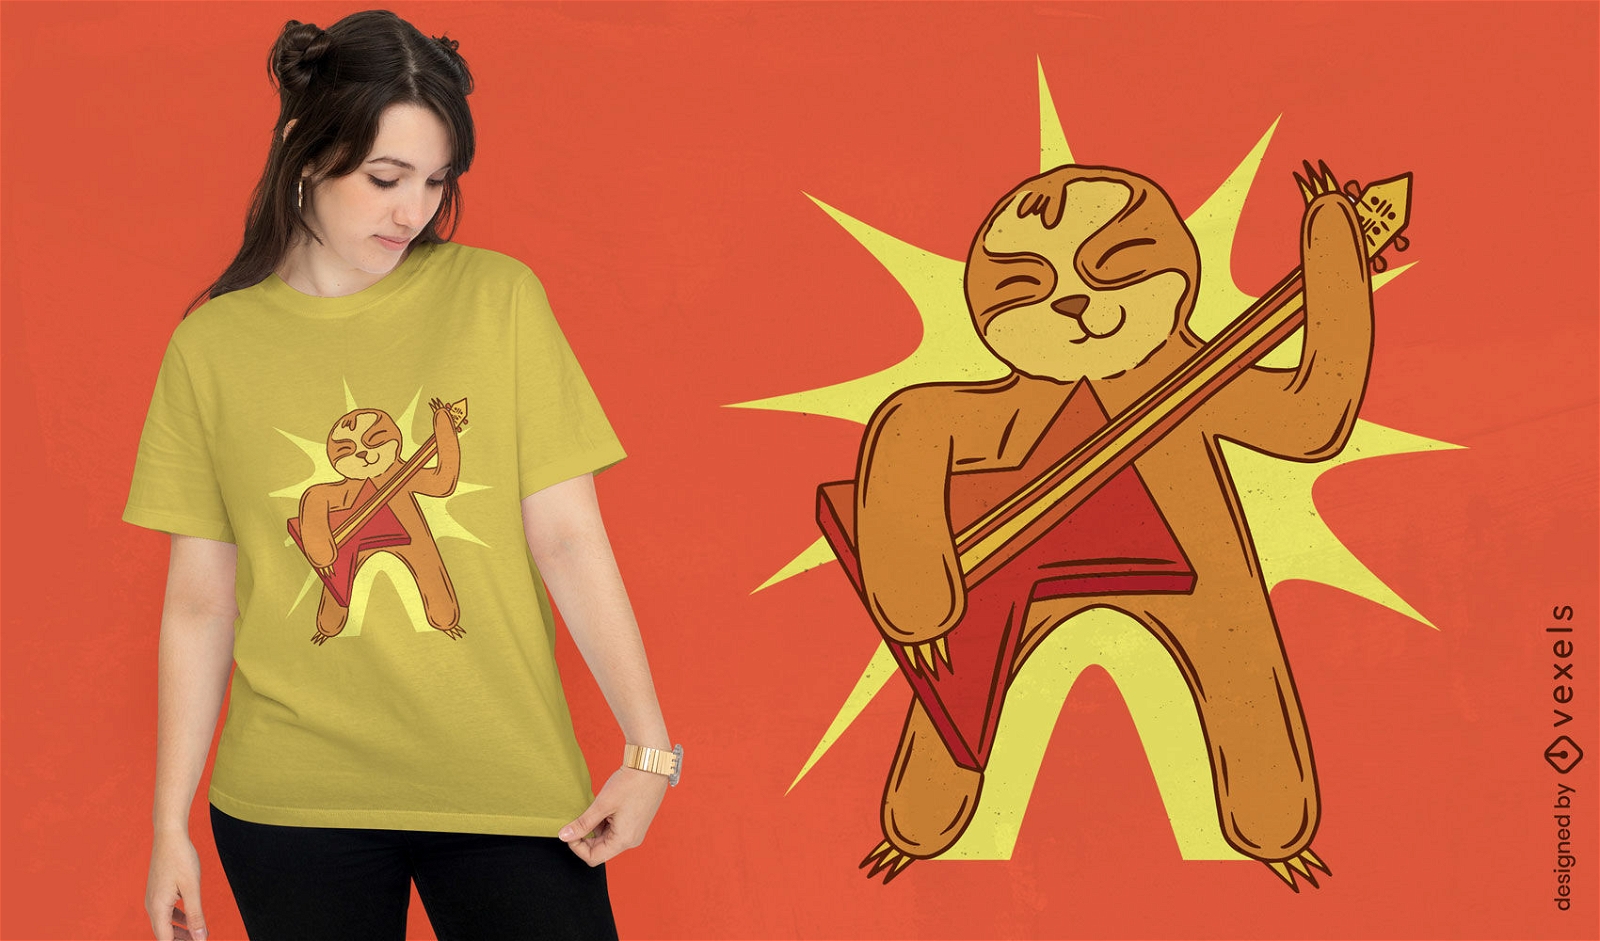 Sloth playing guitar cartoon t-shirt design